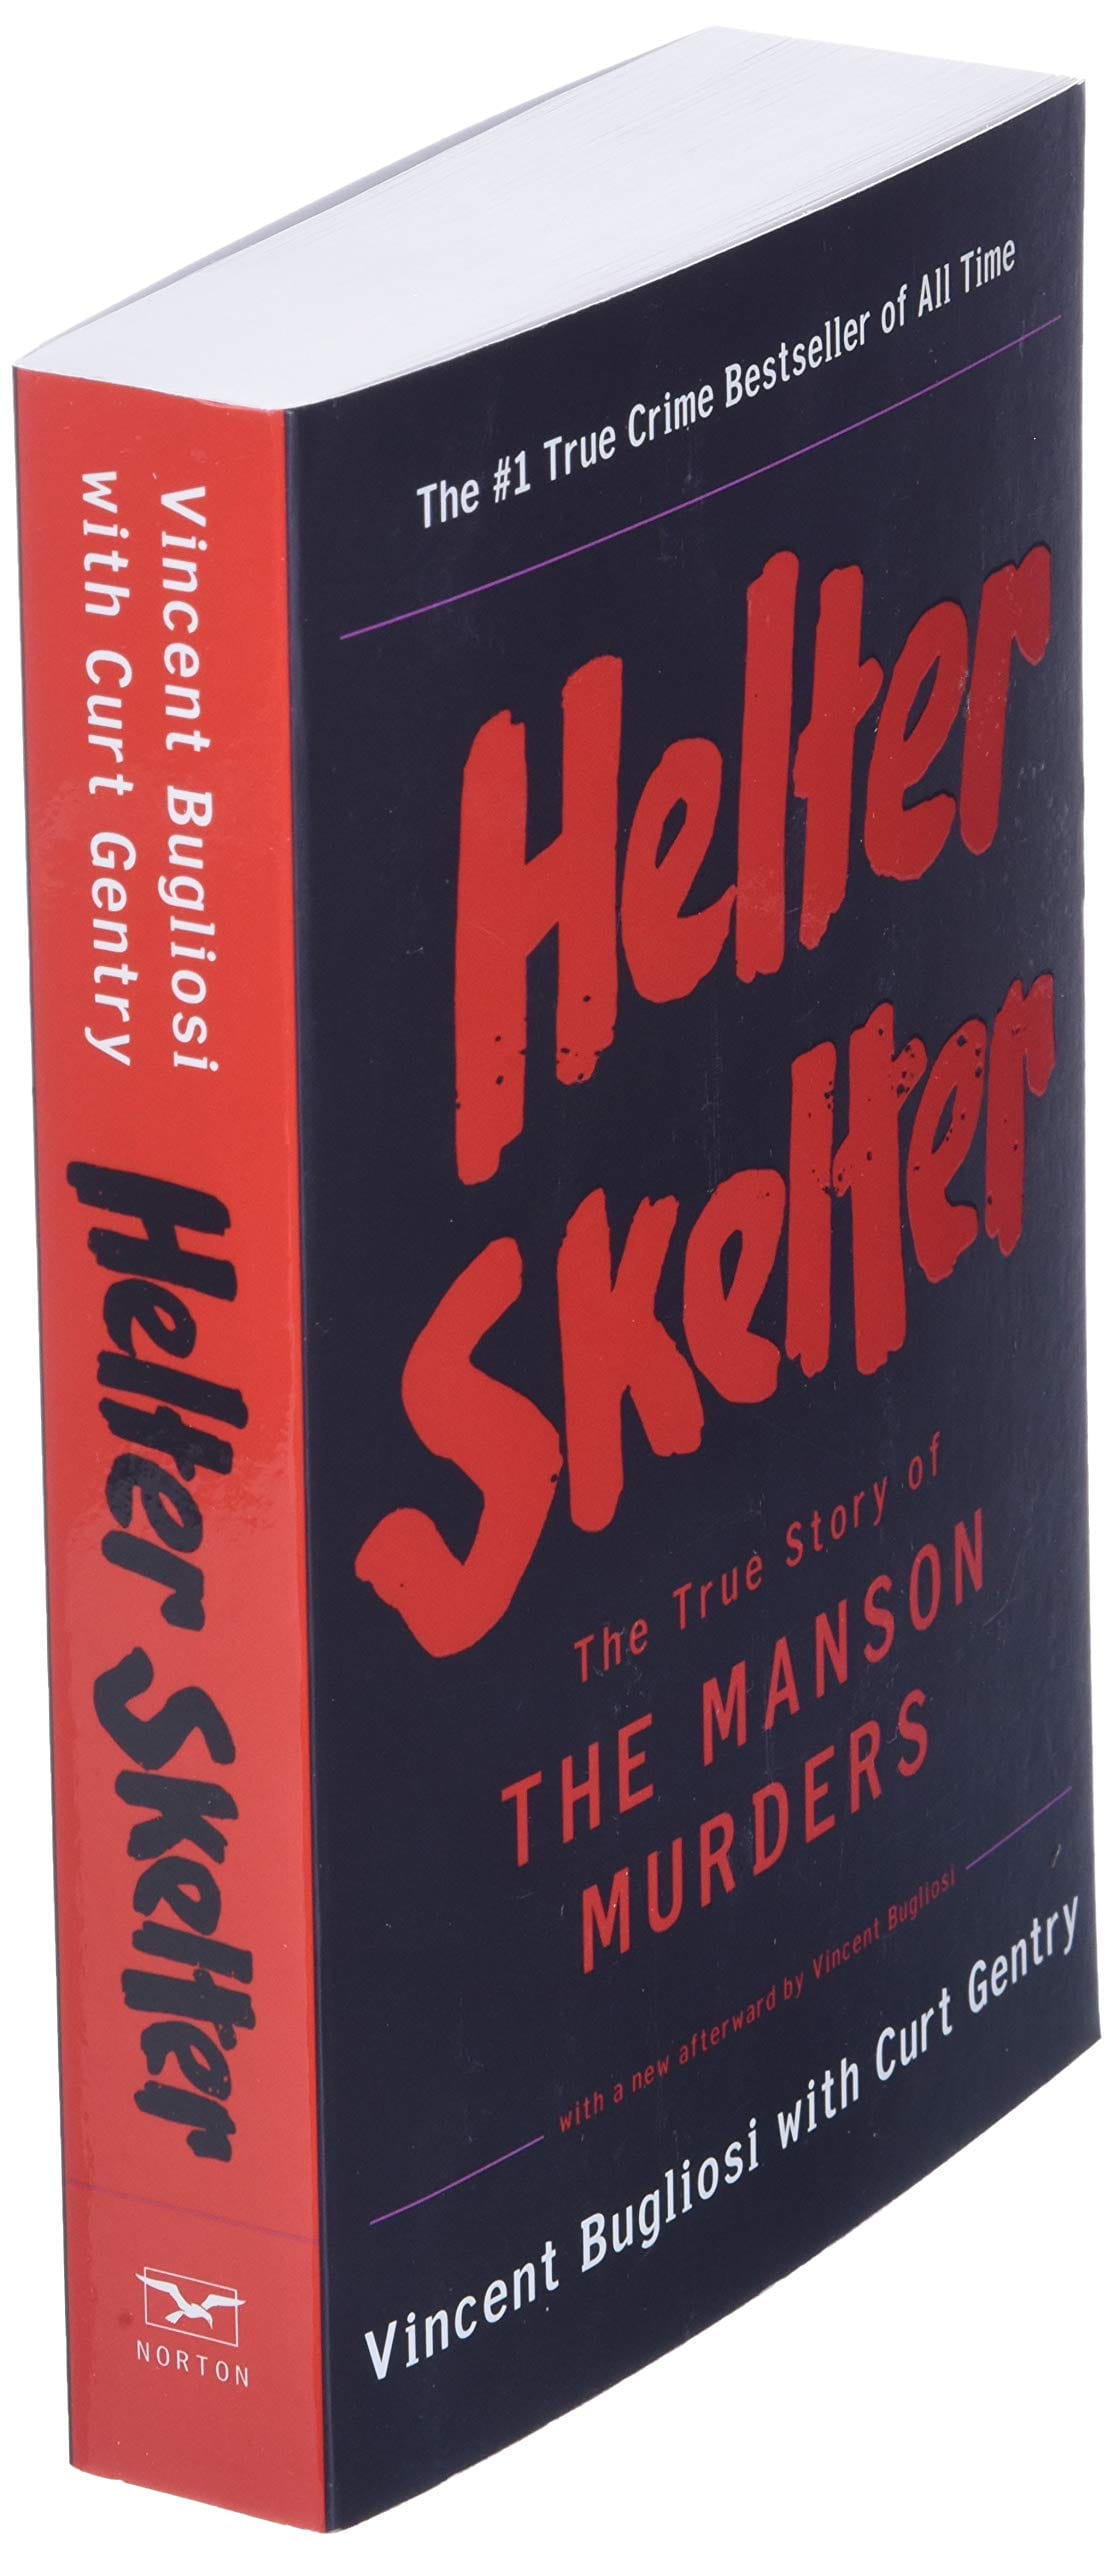 Helter Skelter: True Story of the Manson Murders - Third Eye